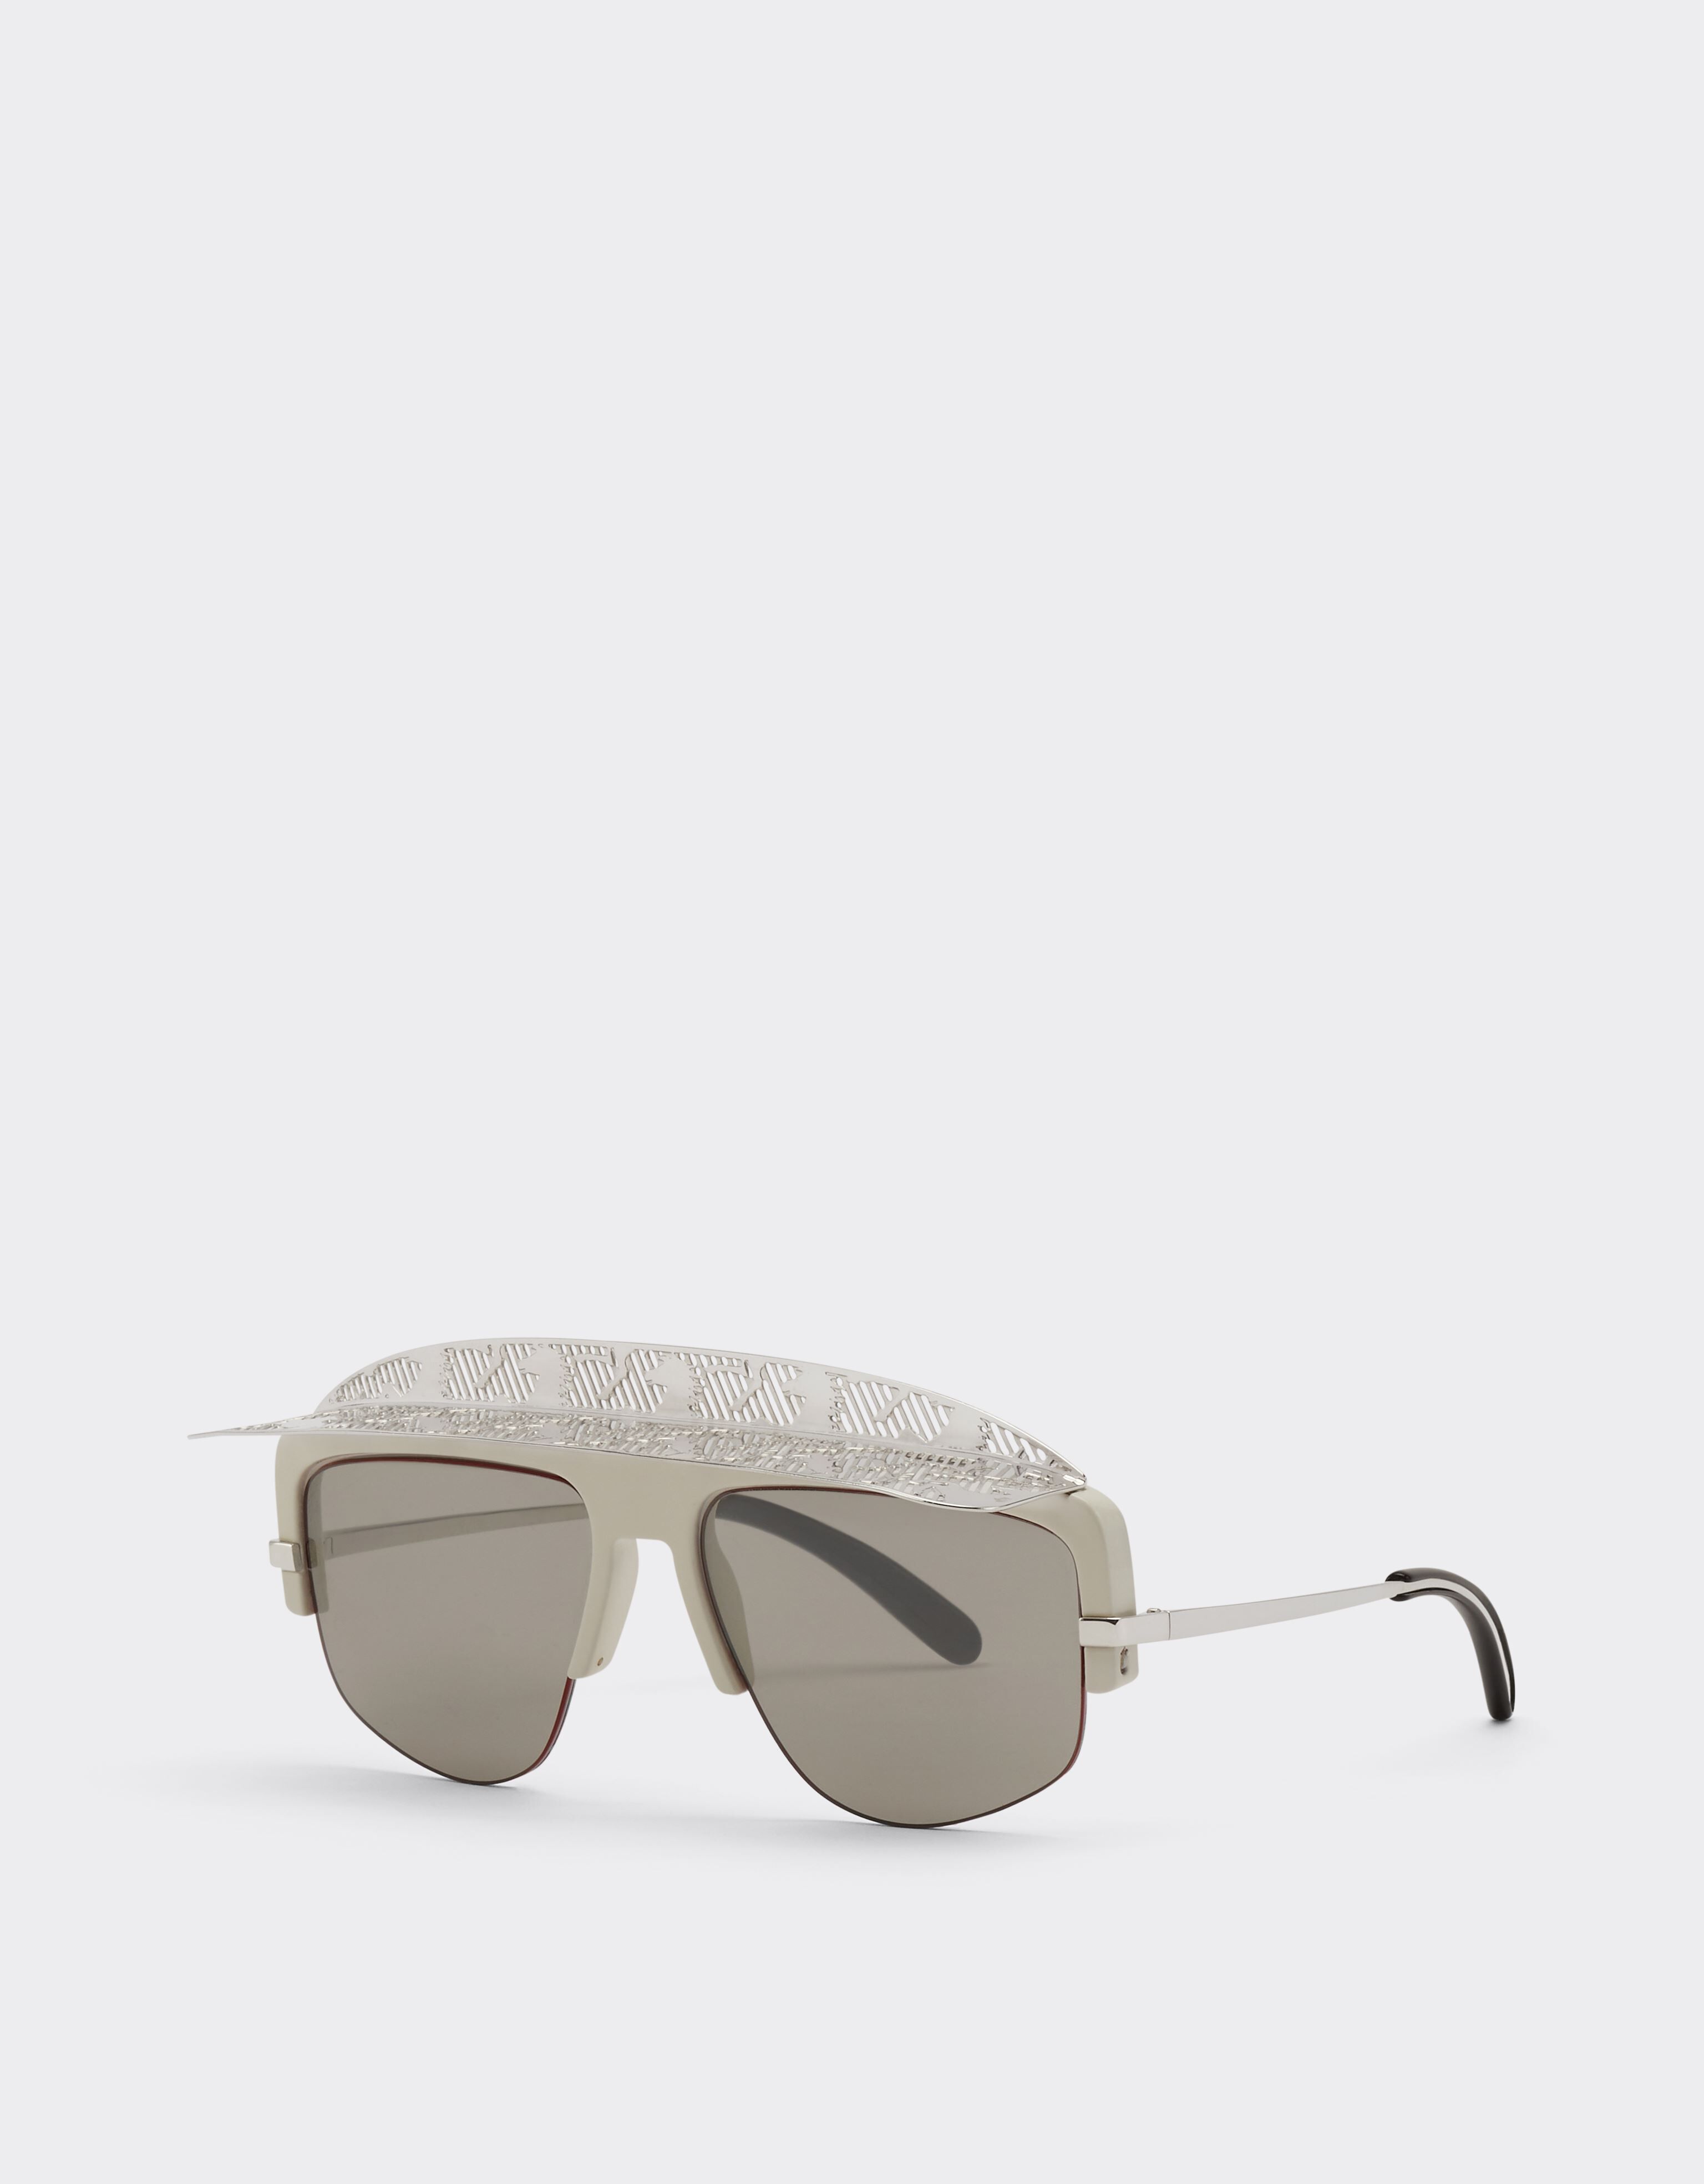 Ferrari Ferrari sunglasses with silver mirror lens Optical White F0827f